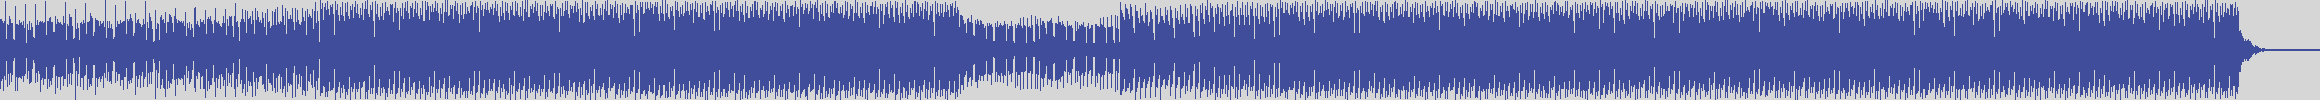 nf_boyz_records [NFY029] Sophisticated Rhythms - Orange Midnight [Blue Sea Mix] audio wave form